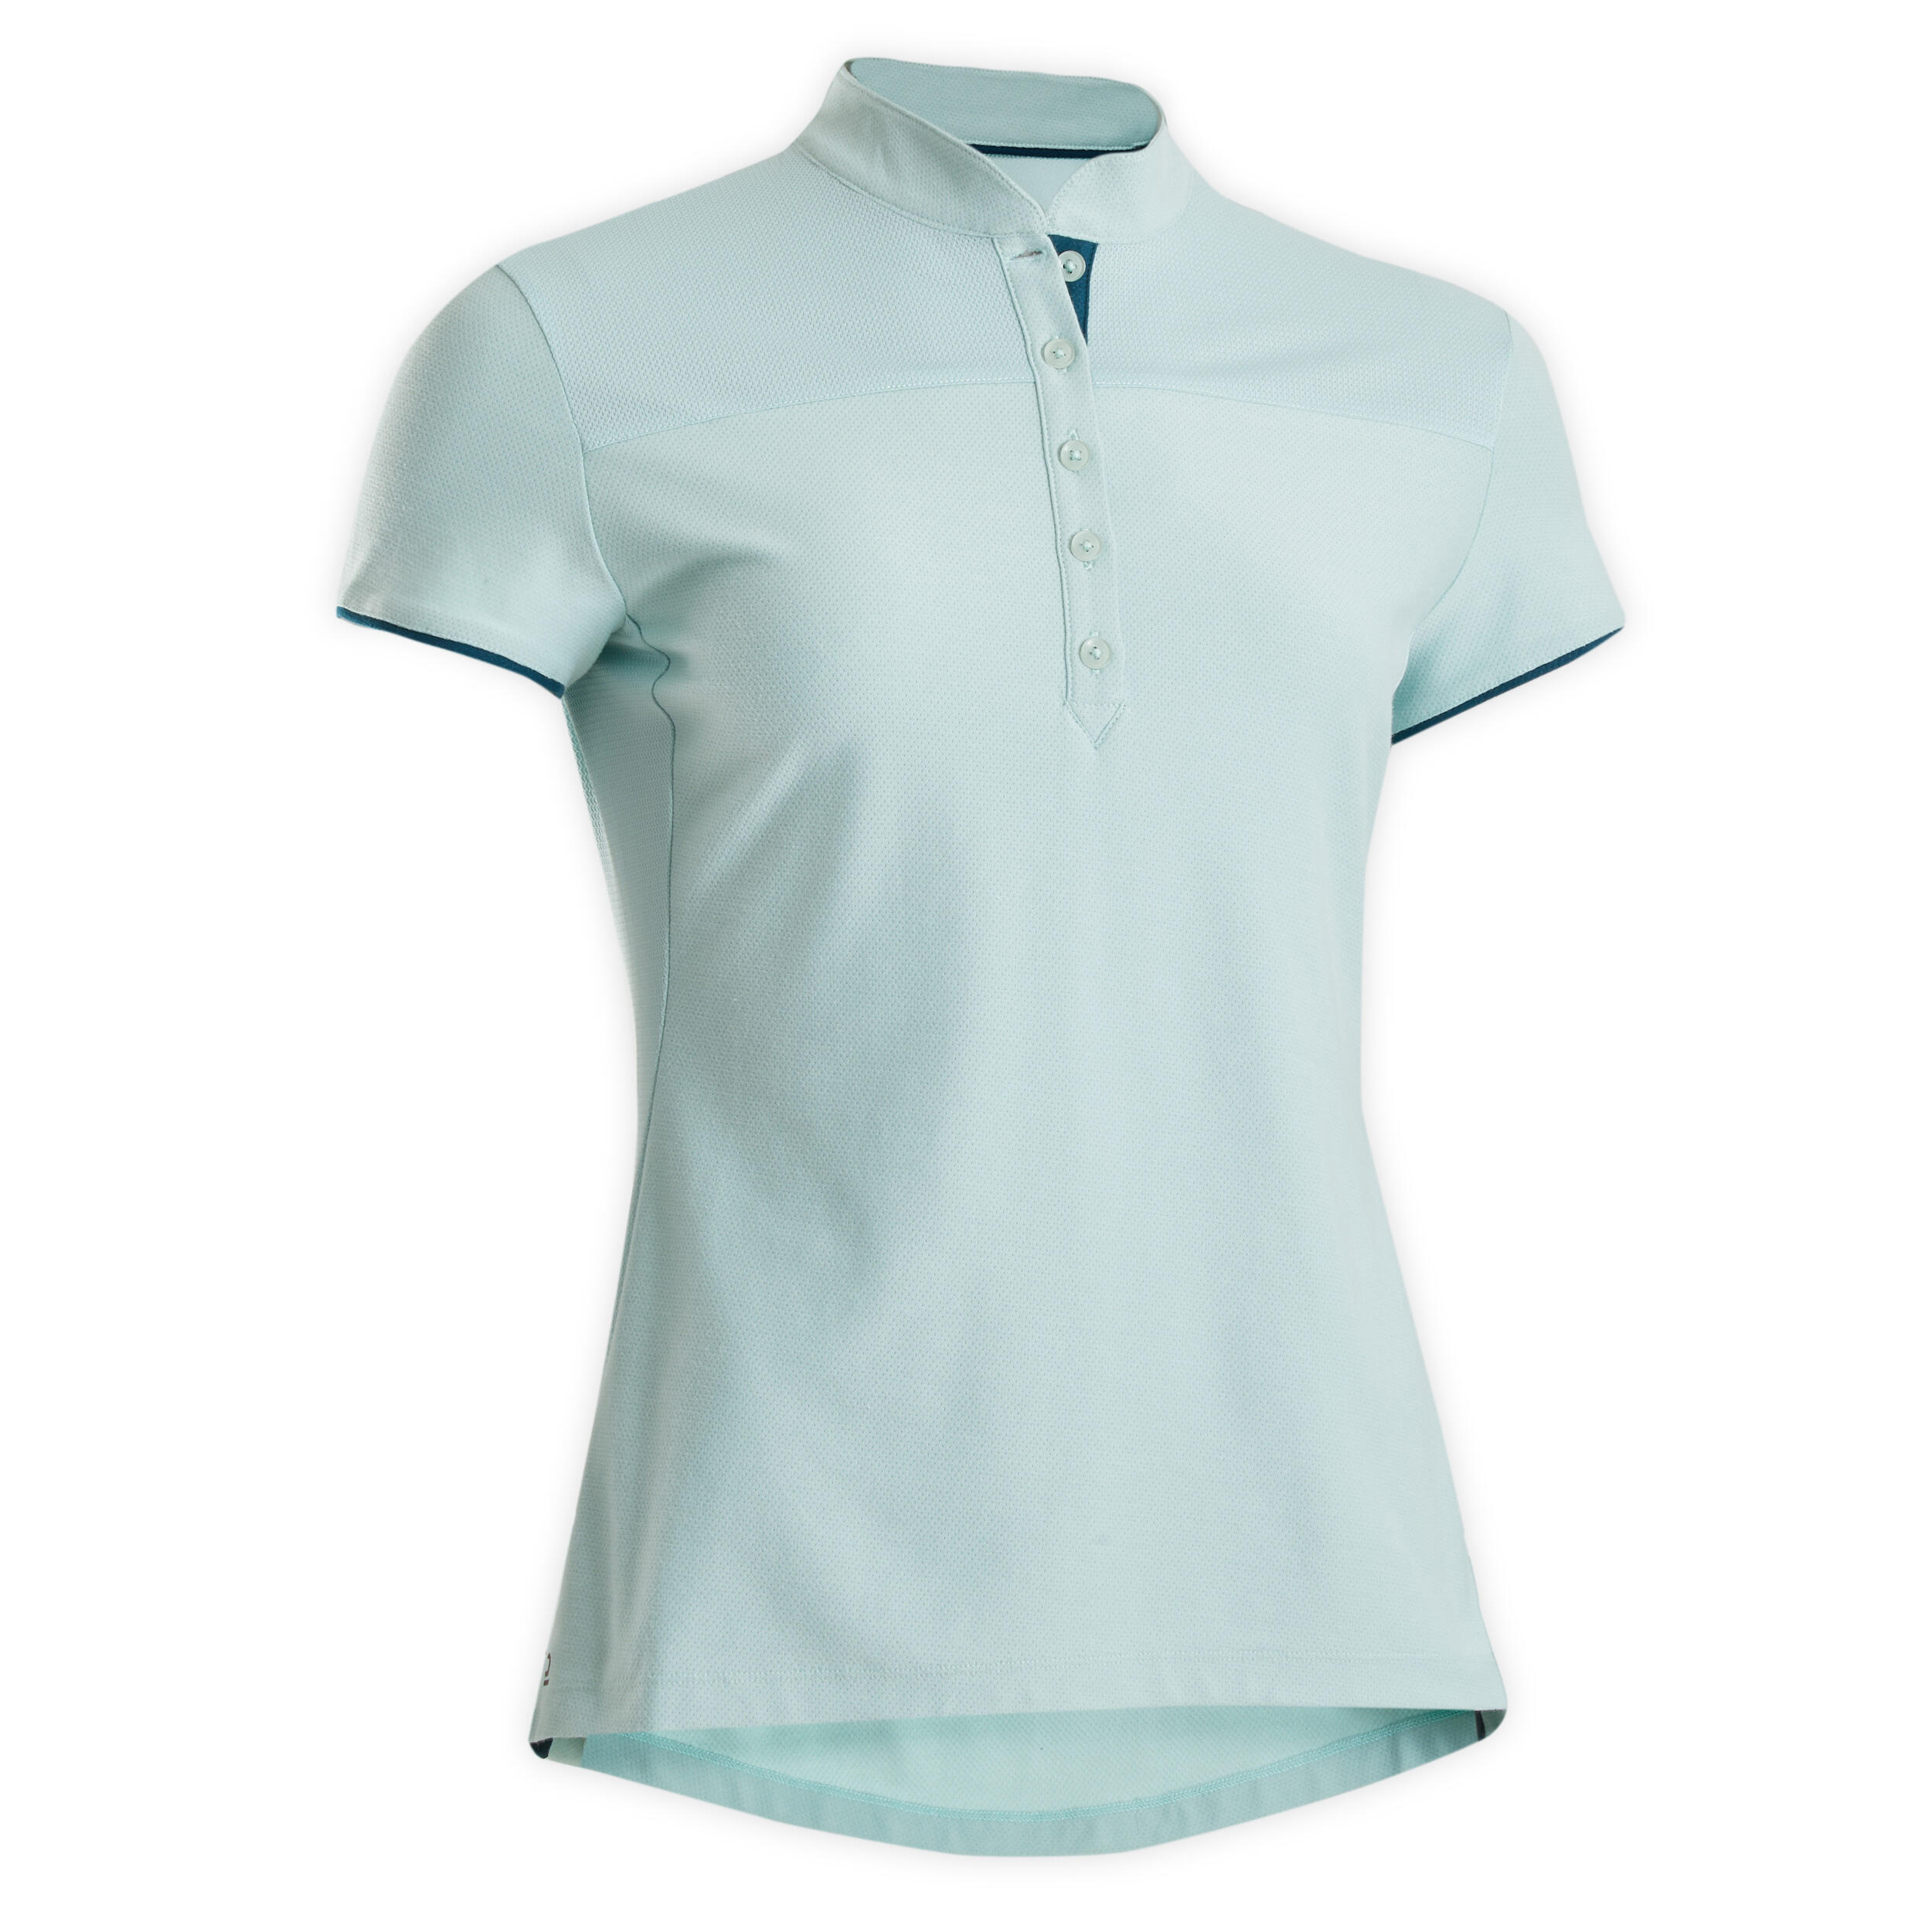 Women's Horse Riding Short-Sleeved Polo Shirt 500 -Green 4/4